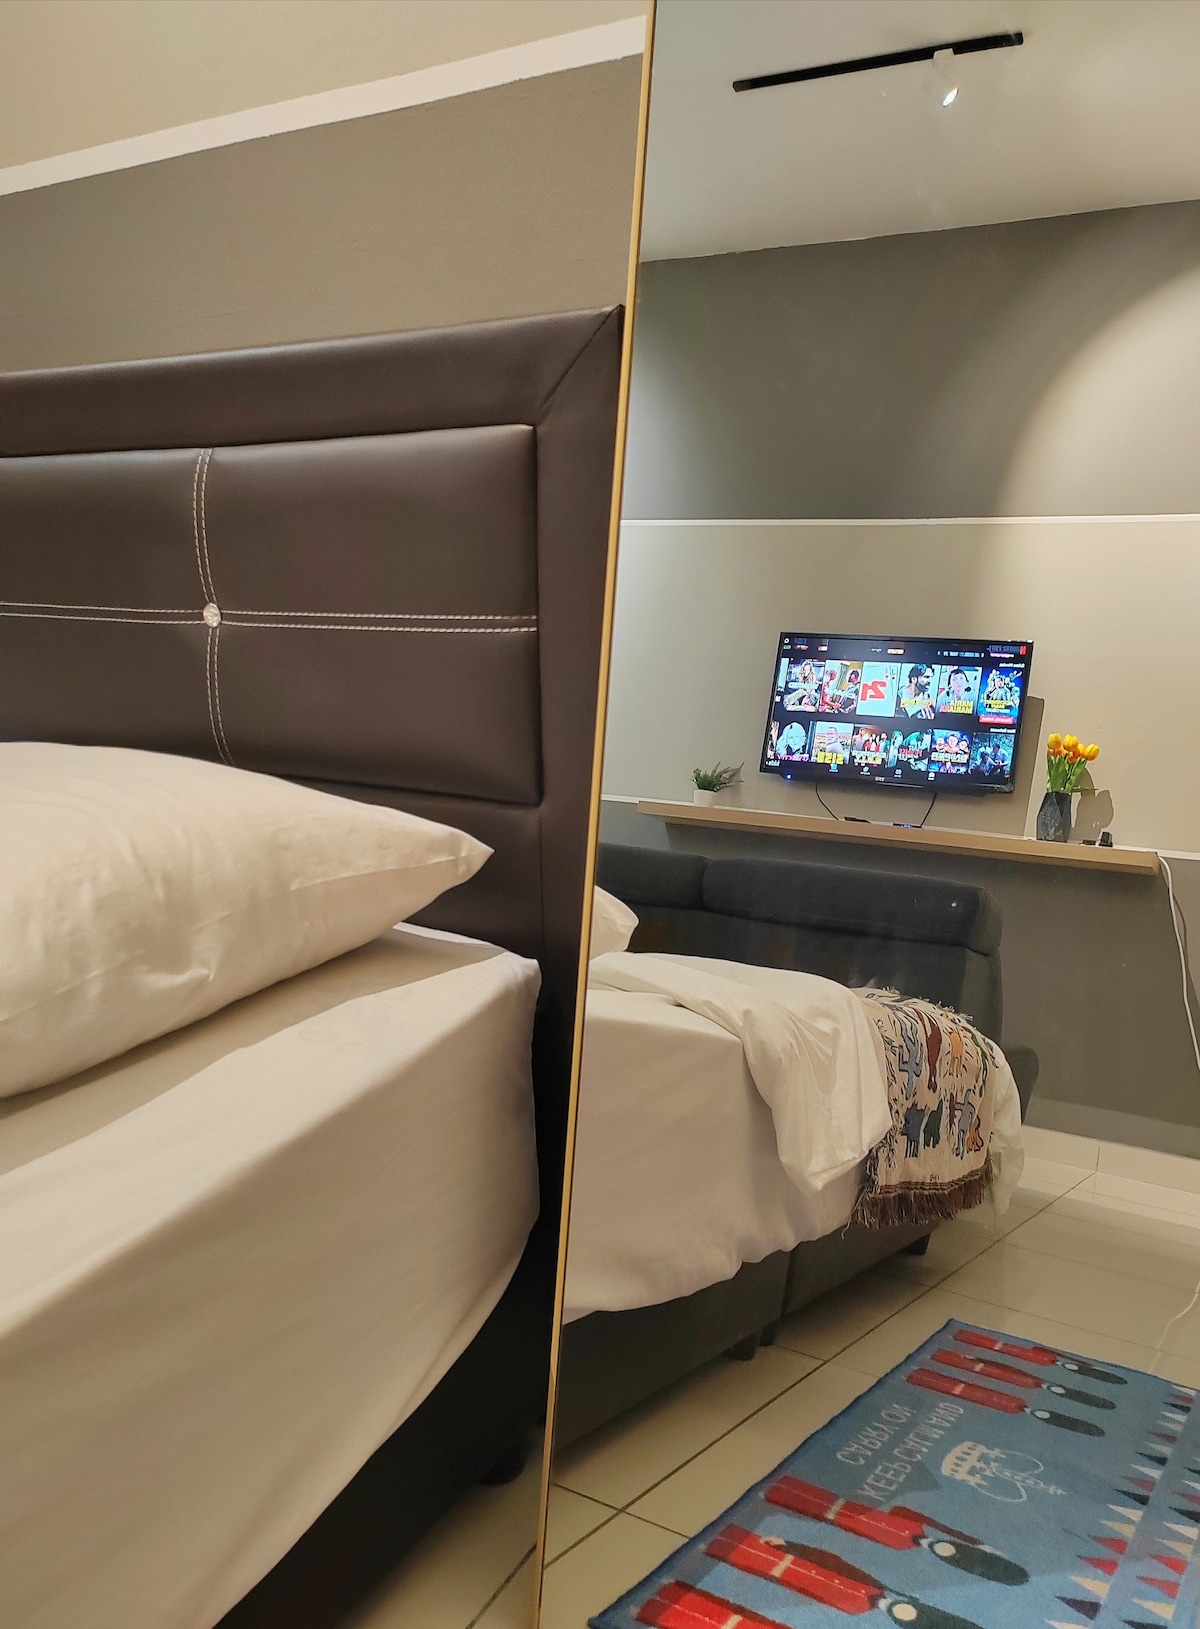 吉隆坡城中城整套单间公寓Netflix gleneagles 3tower